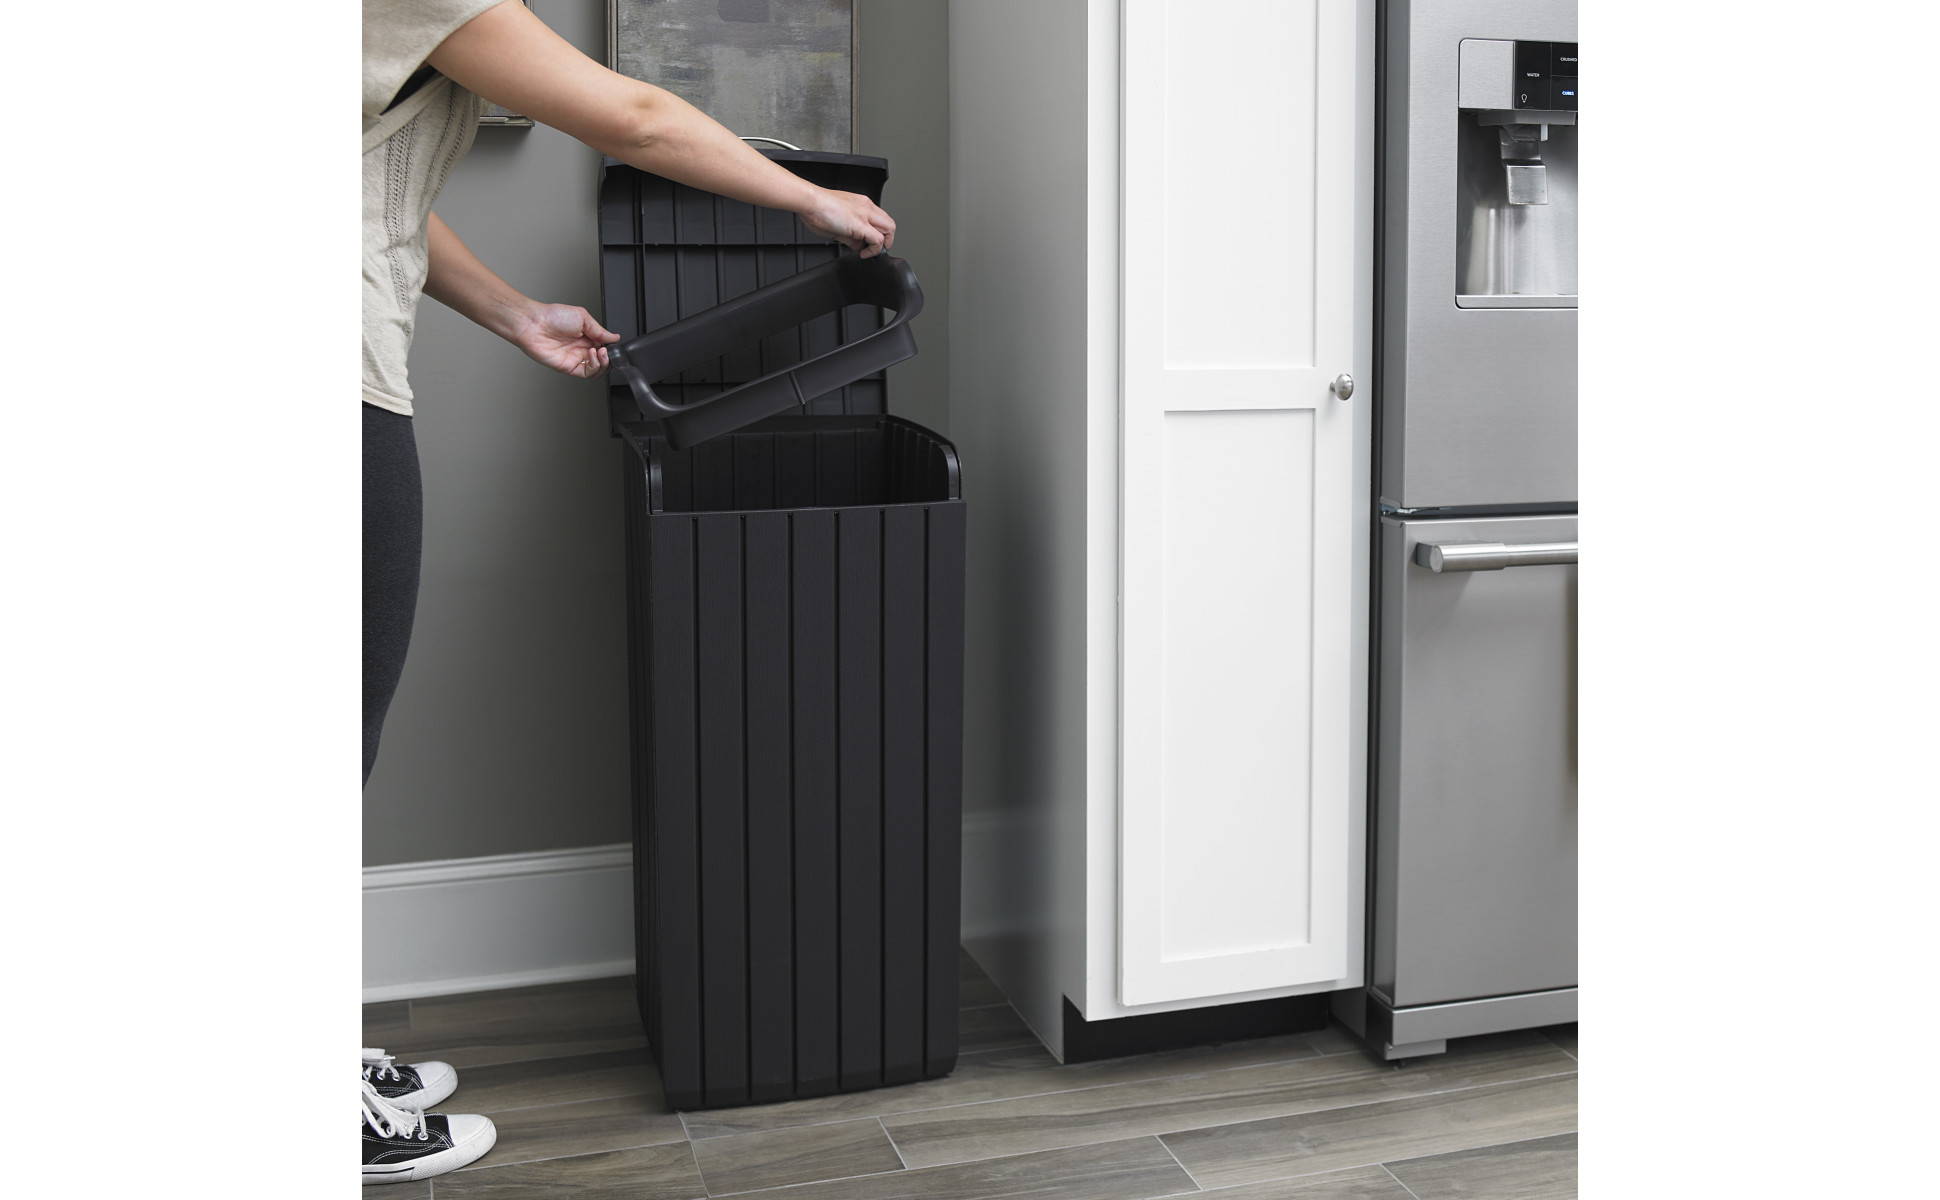 Keter Copenhagen 30-Gallon Resin Wood Style Outdoor Trash Can Waste Bin